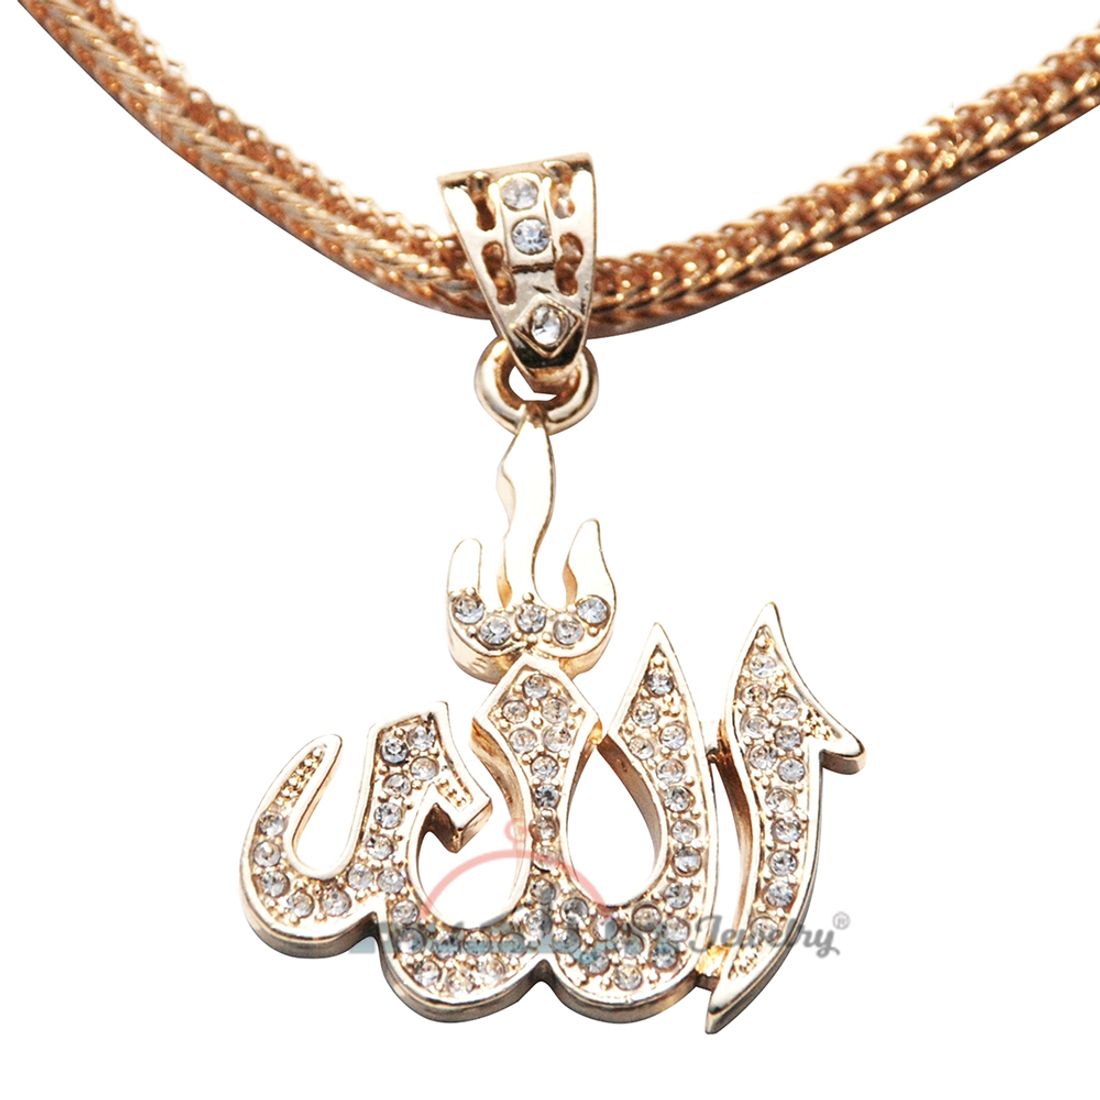 Allah Pendant with Rhinestones Gold-tone on 61cm Fox Tail Chain